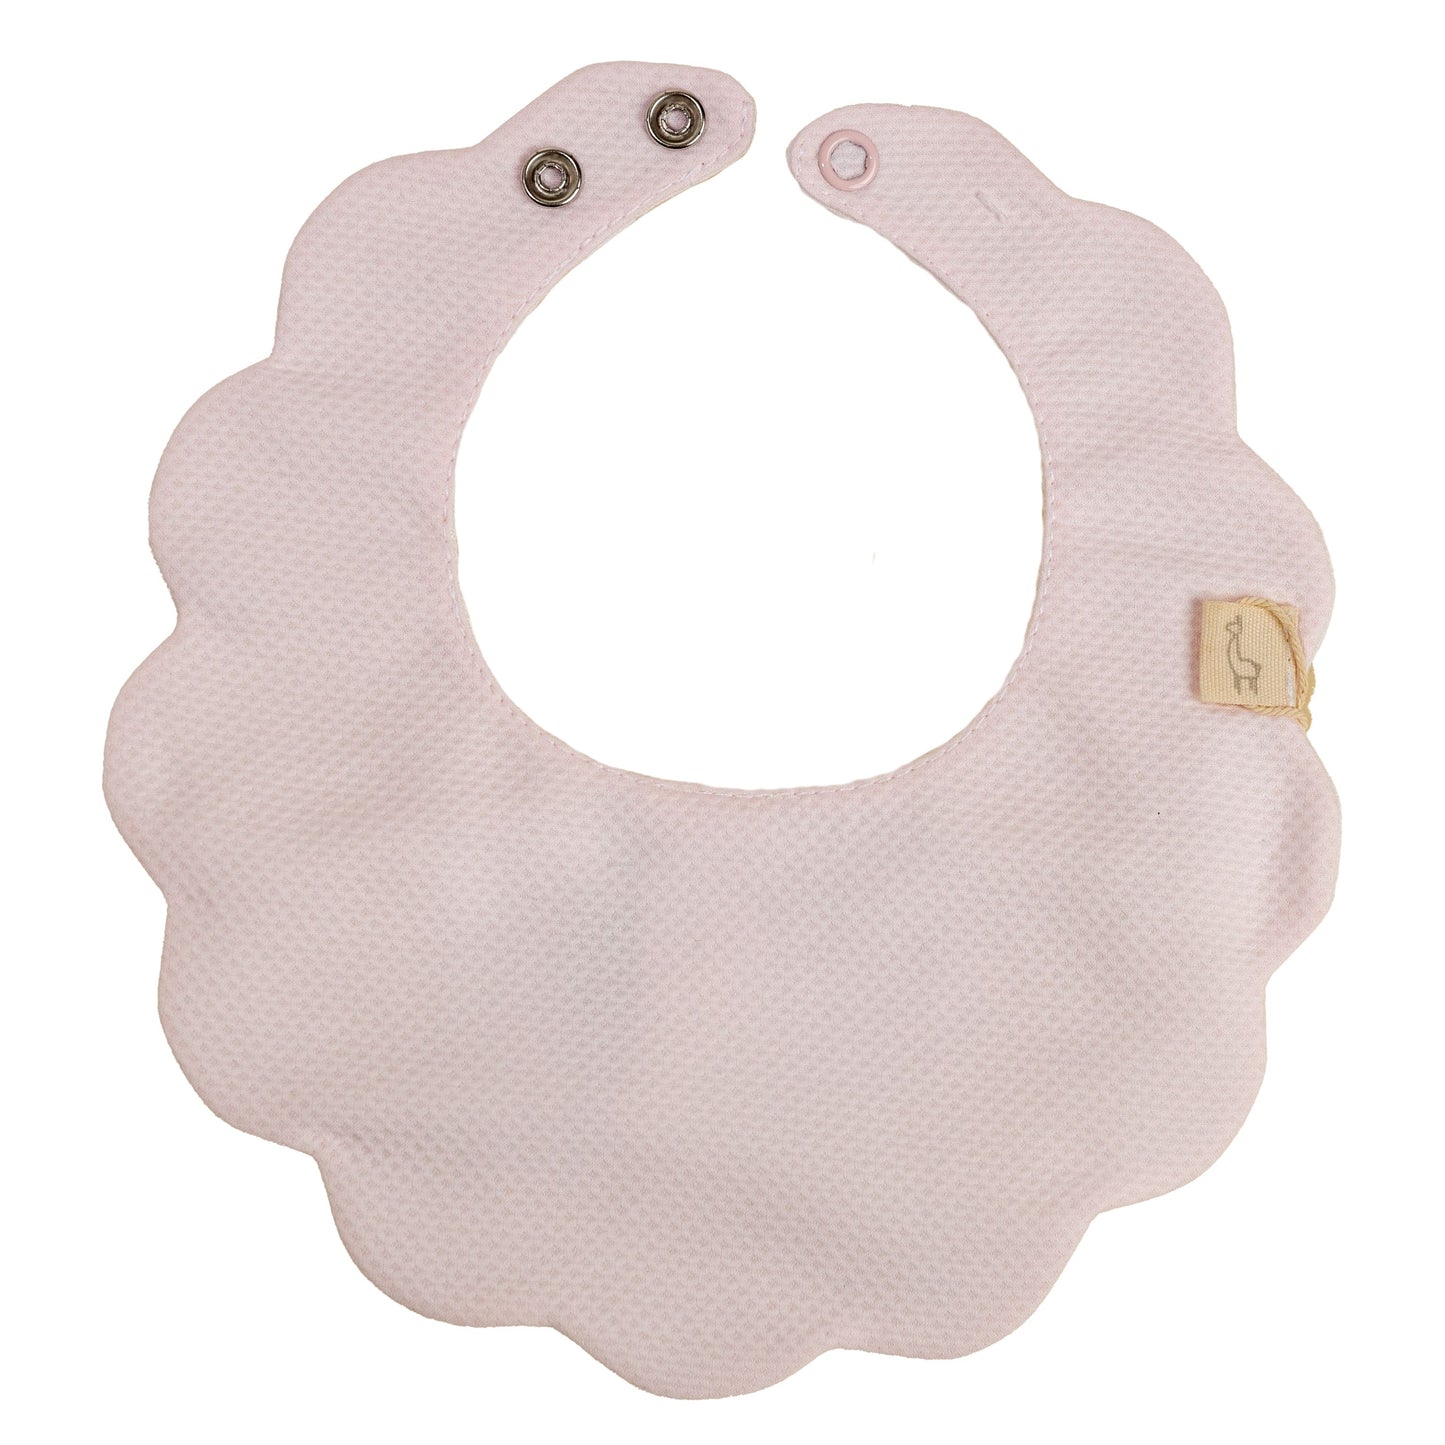 Baby Gi Baby Pink Cotton Pique Scallop Collar Gift Set